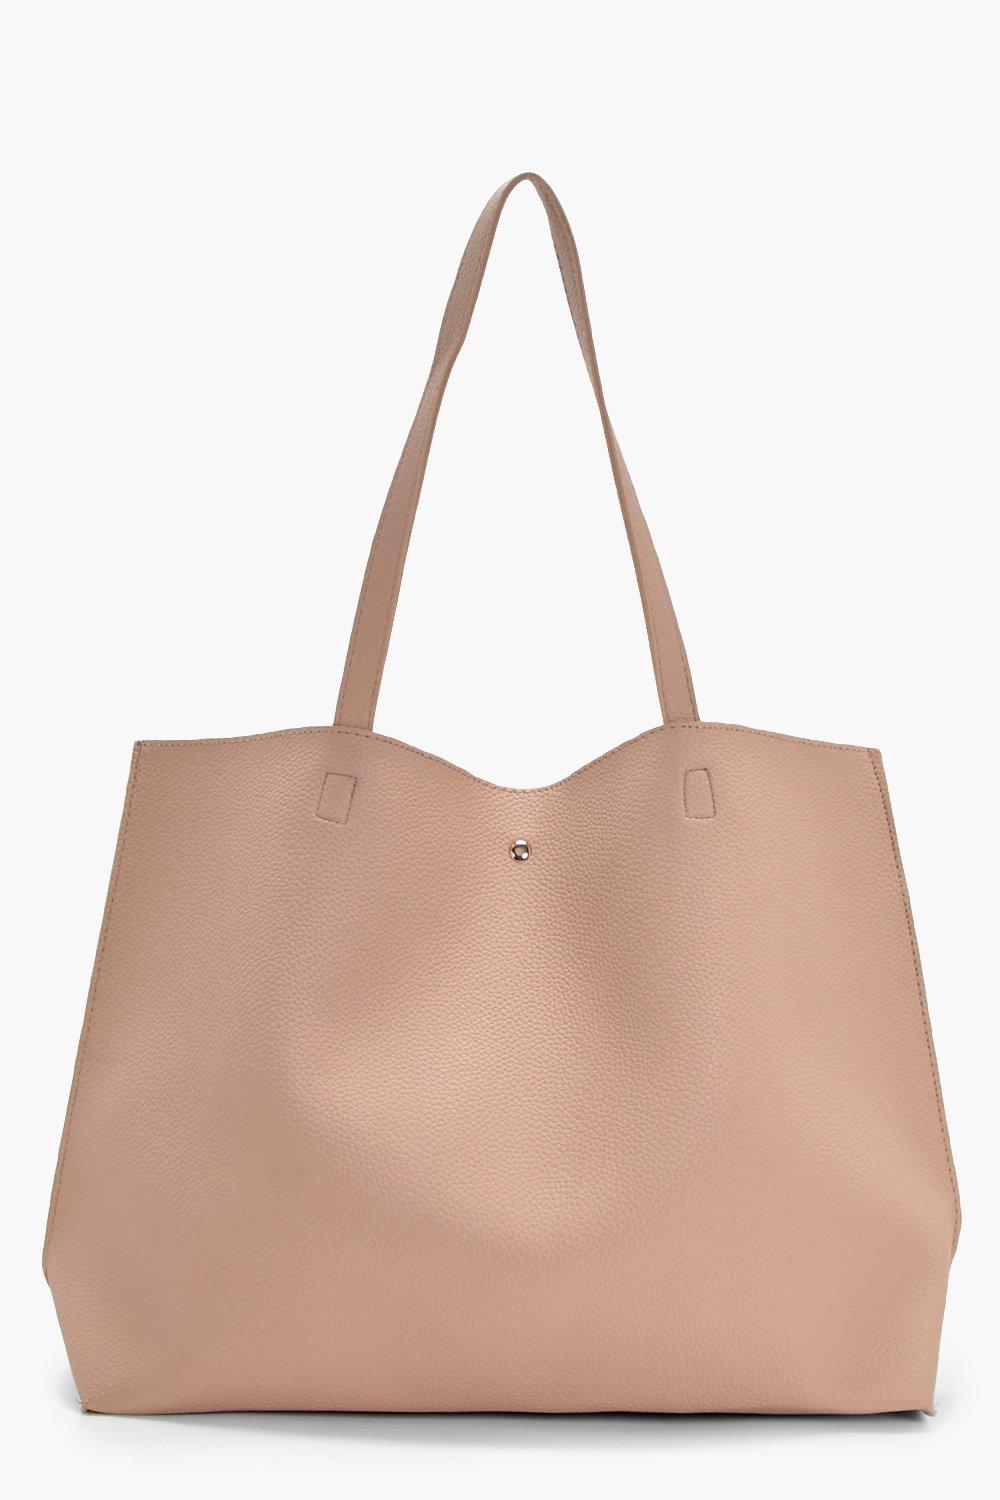 Womens Large Popper Tote Shopper Bag - Beige - One Size, Beige